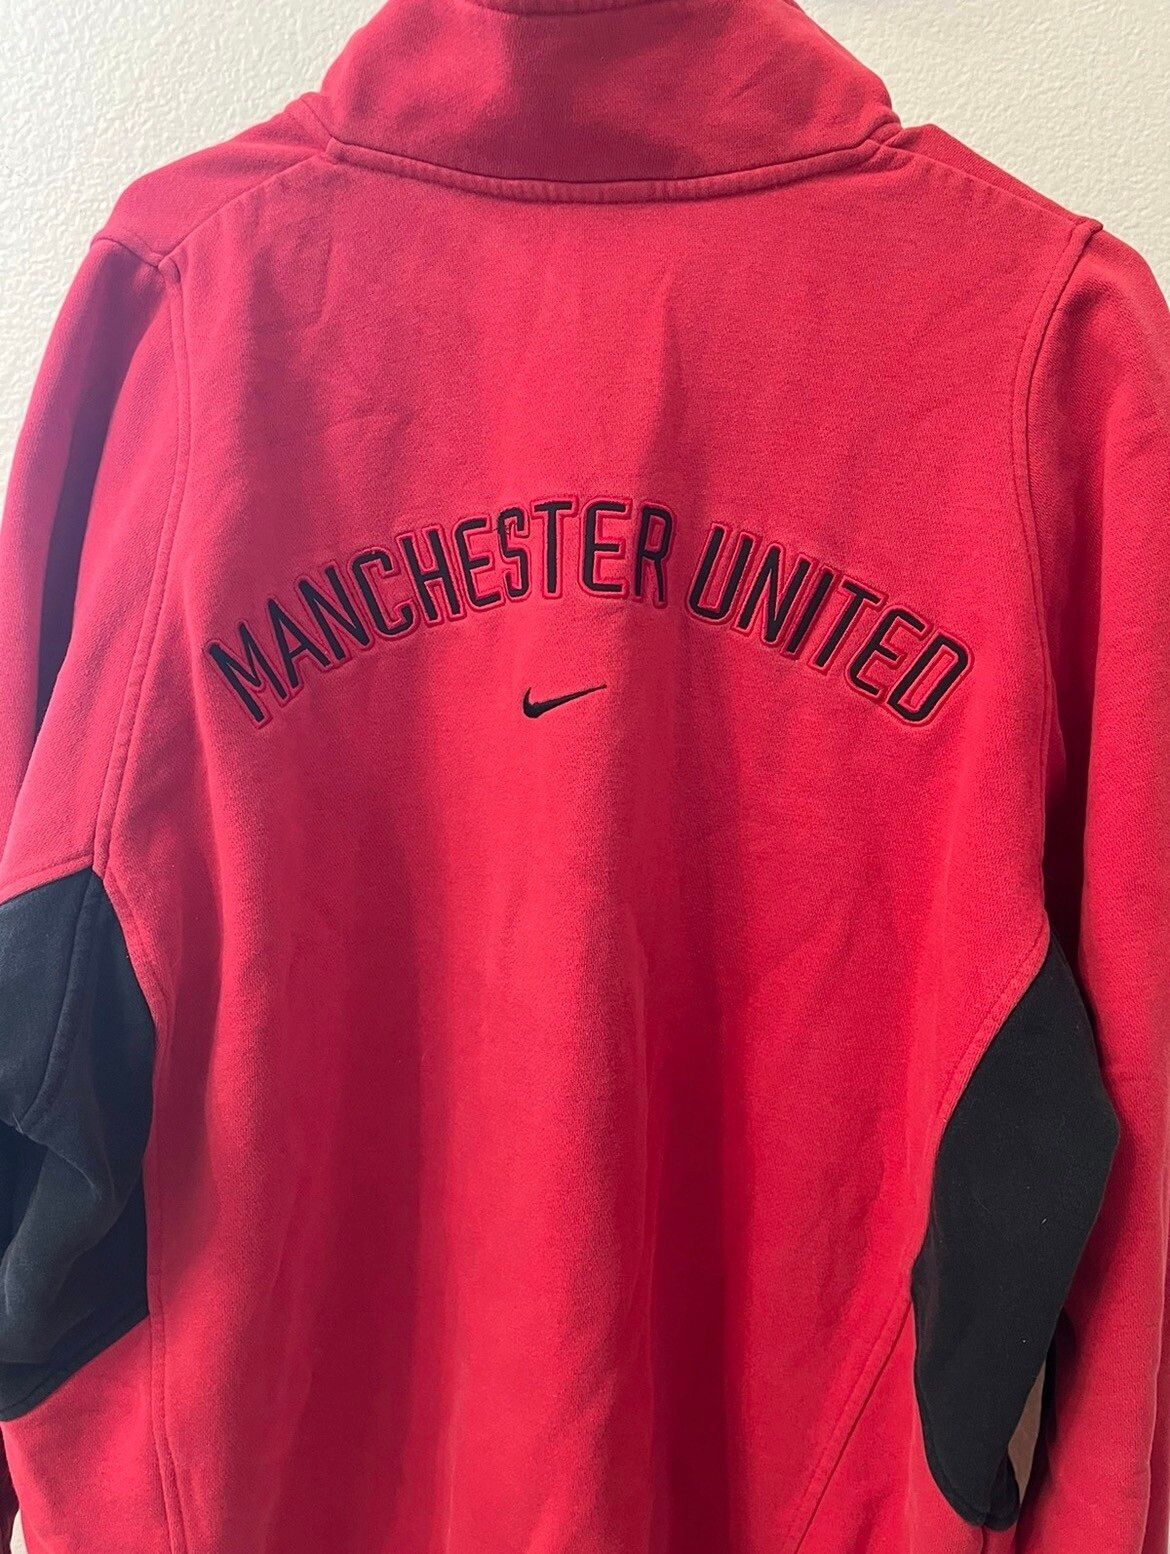 Nike Vintage Nike “Manchester United” Jacket Size US XL / EU 56 / 4 - 2 Preview